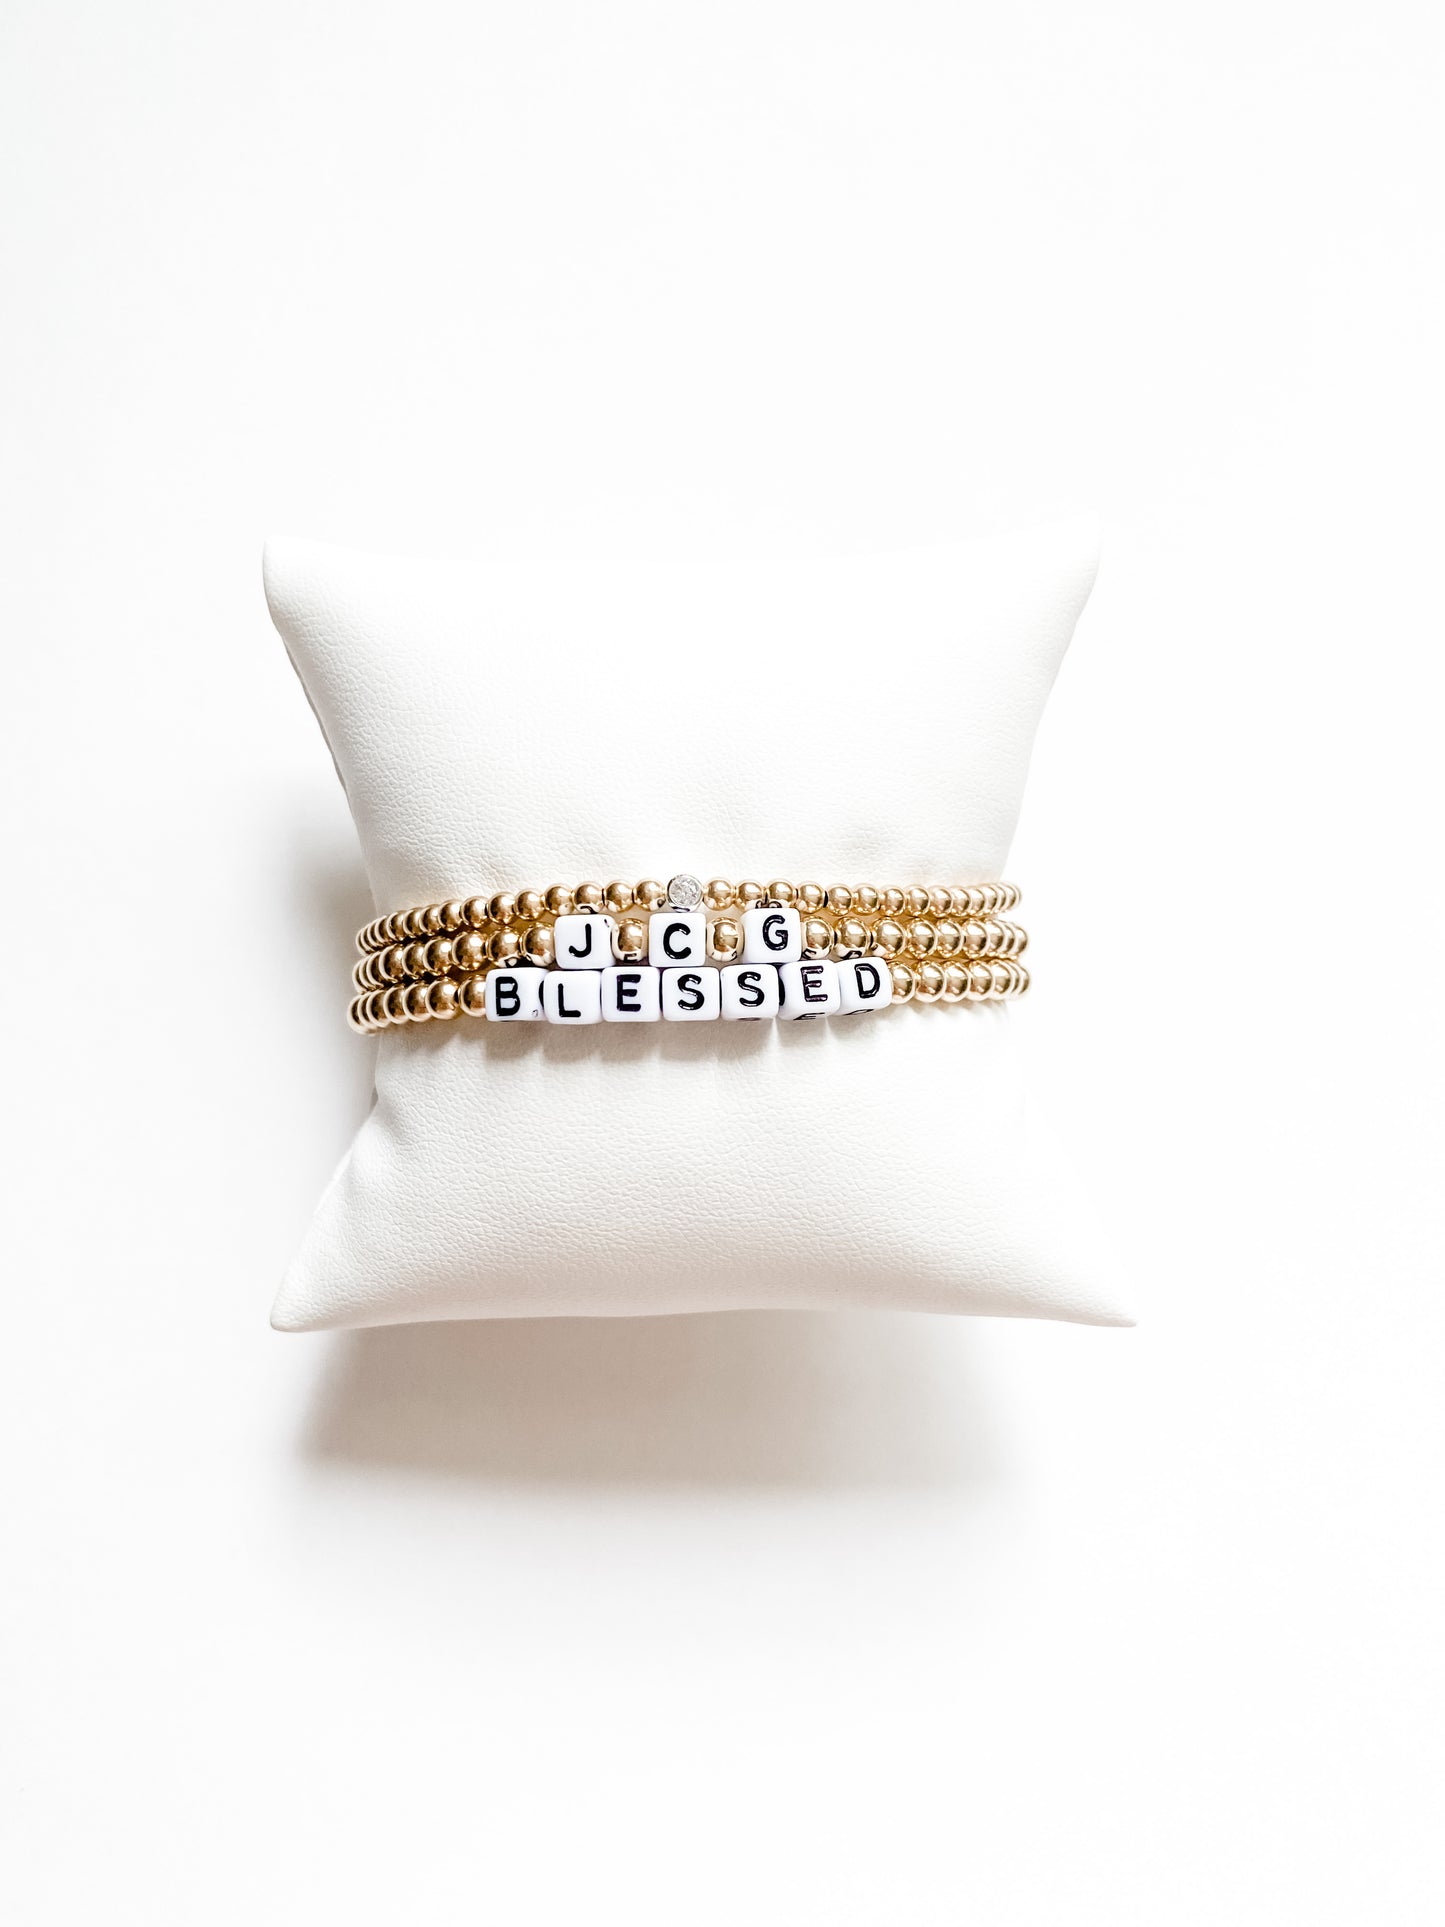 Gold Filled Custom Initials or Word Bracelet | 4mm